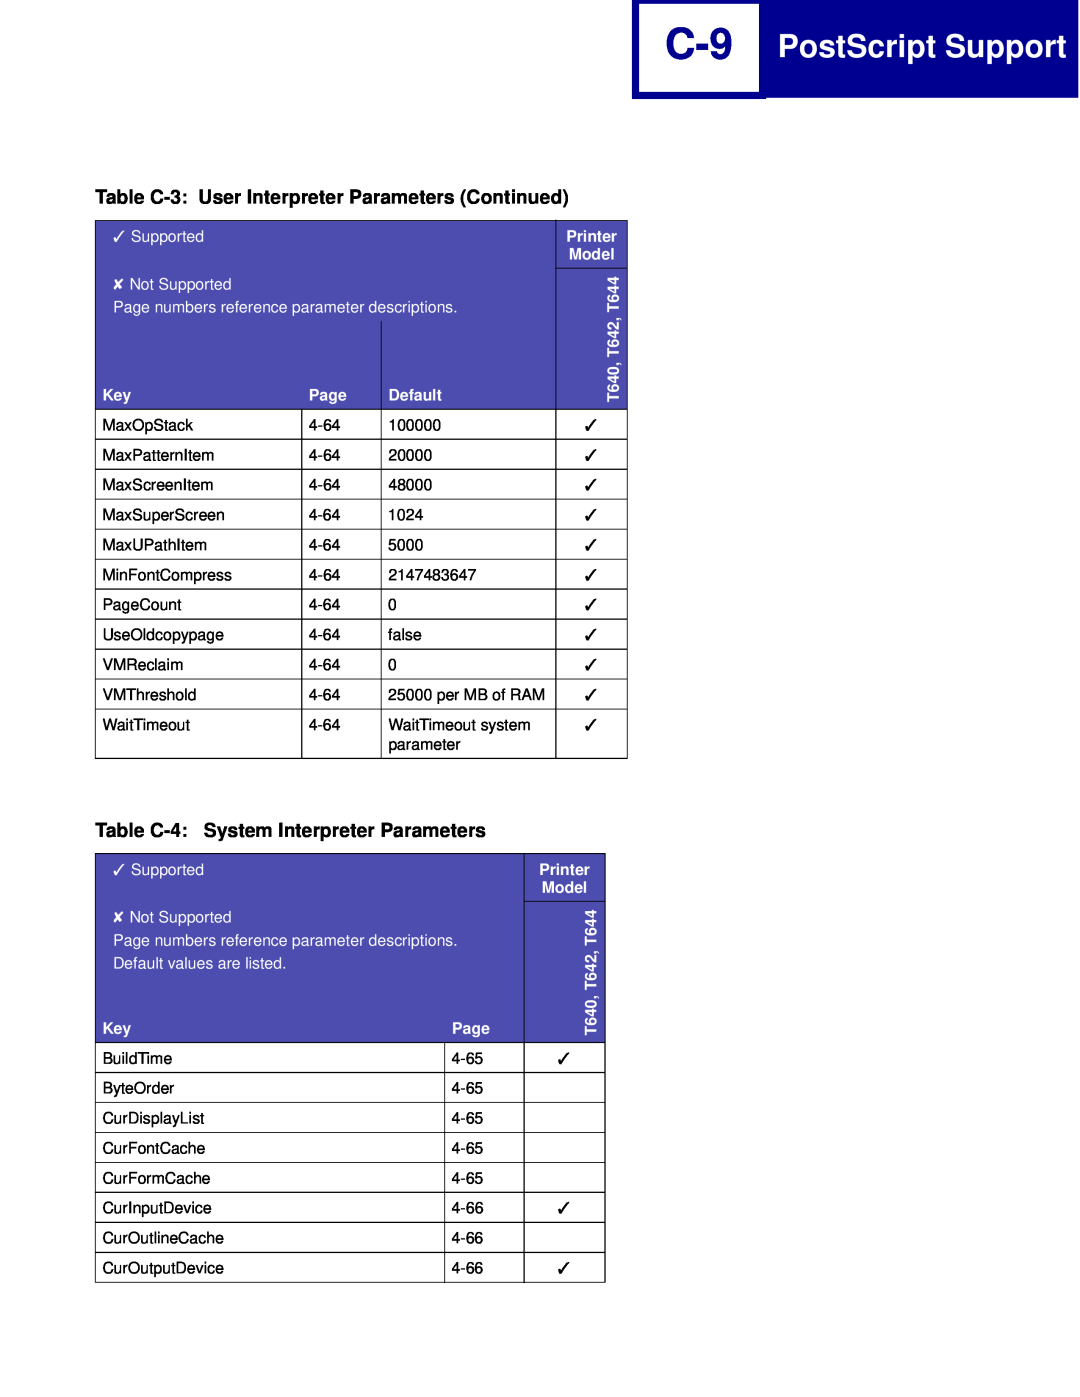 Lexmark C762 PostScript Support, Table C-3 User Interpreter Parameters Continued, Table C-4 System Interpreter Parameters 